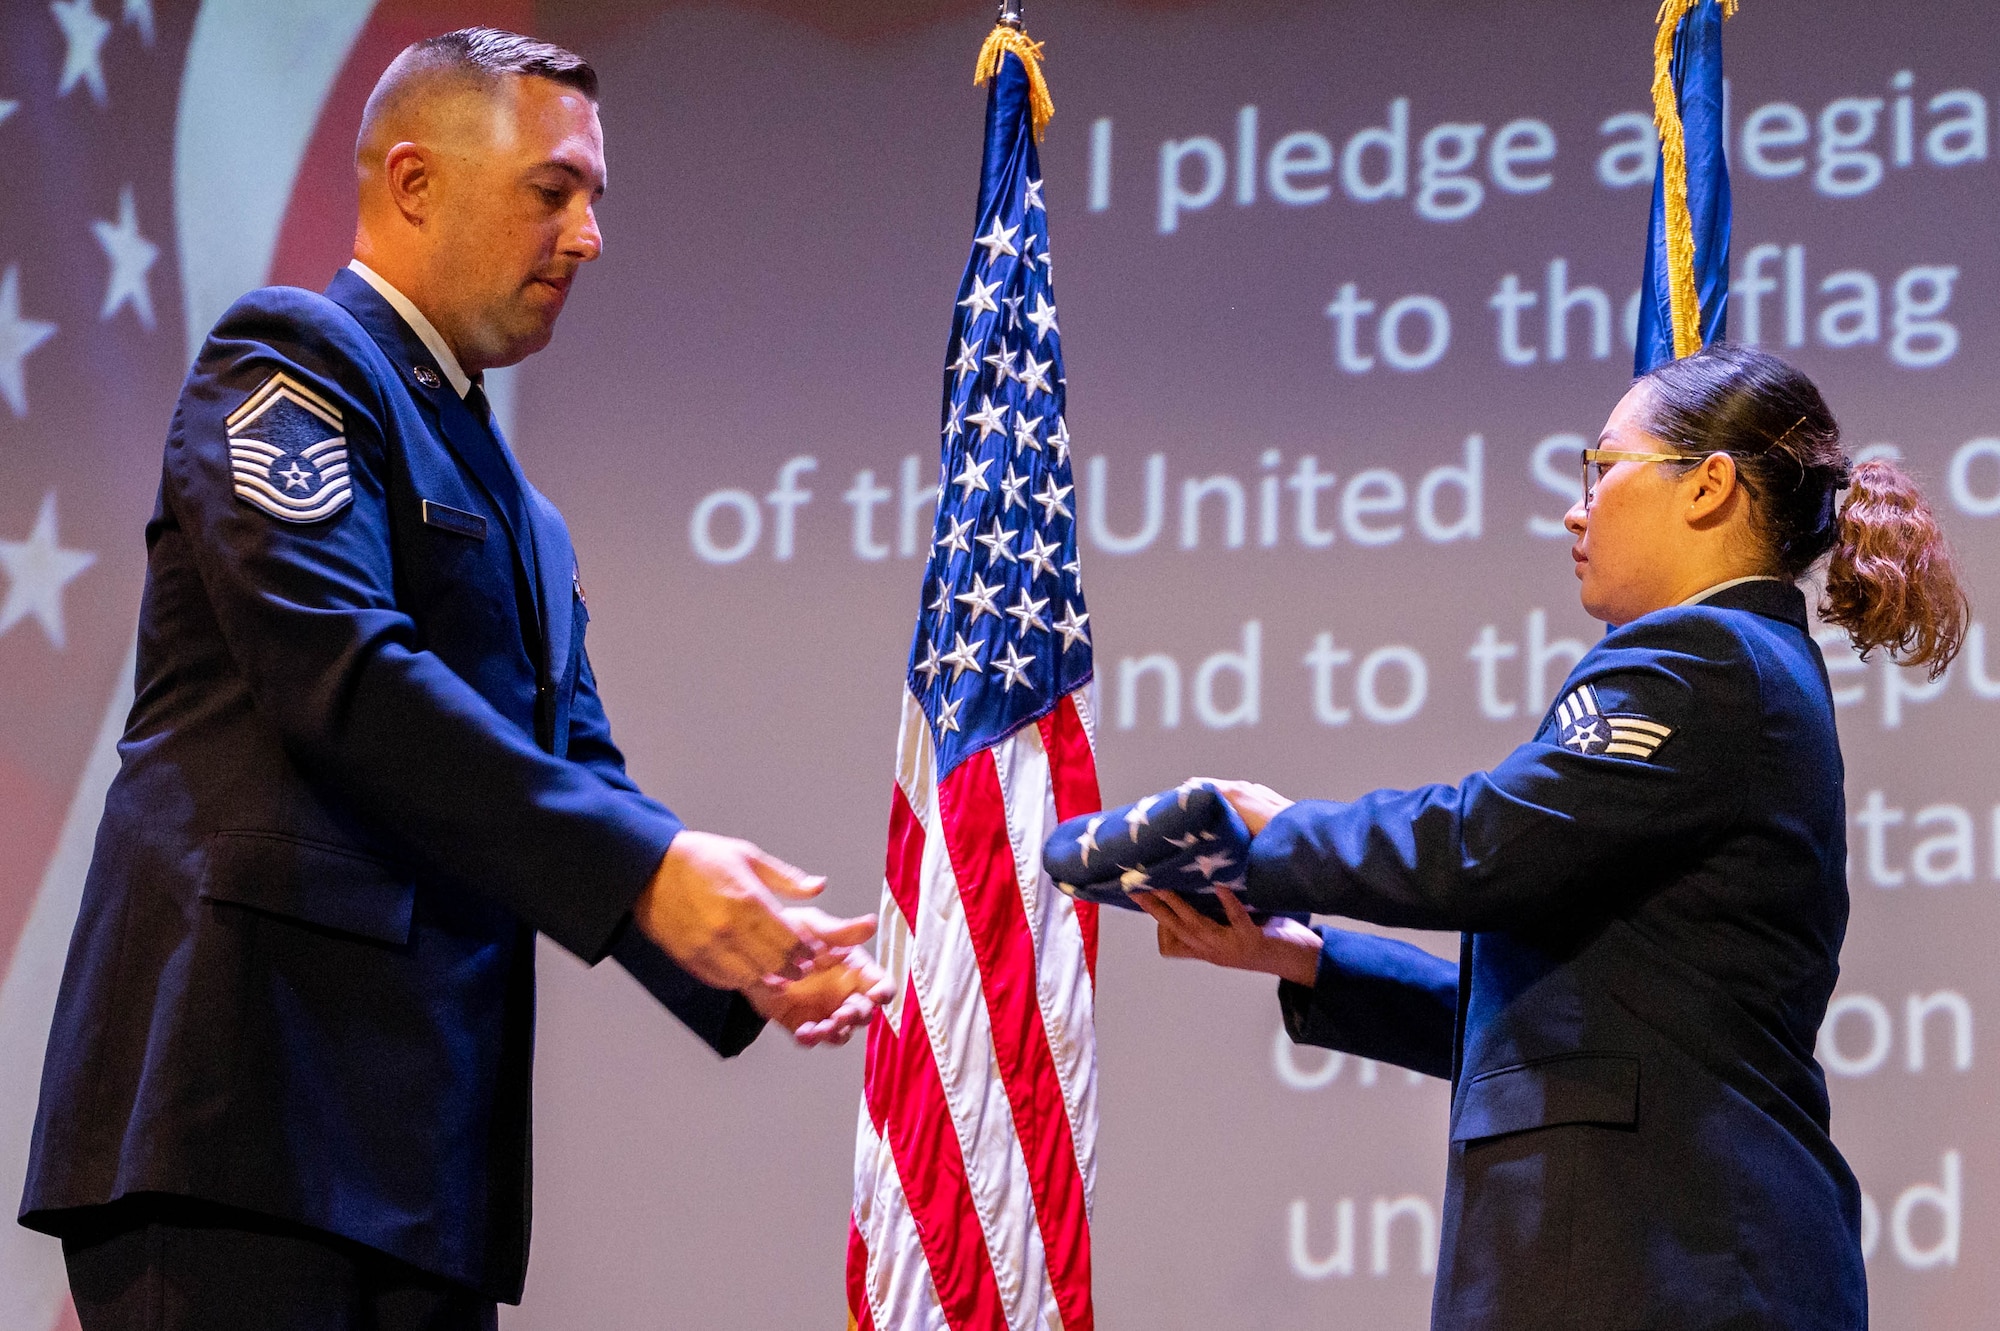 Airman holds flag